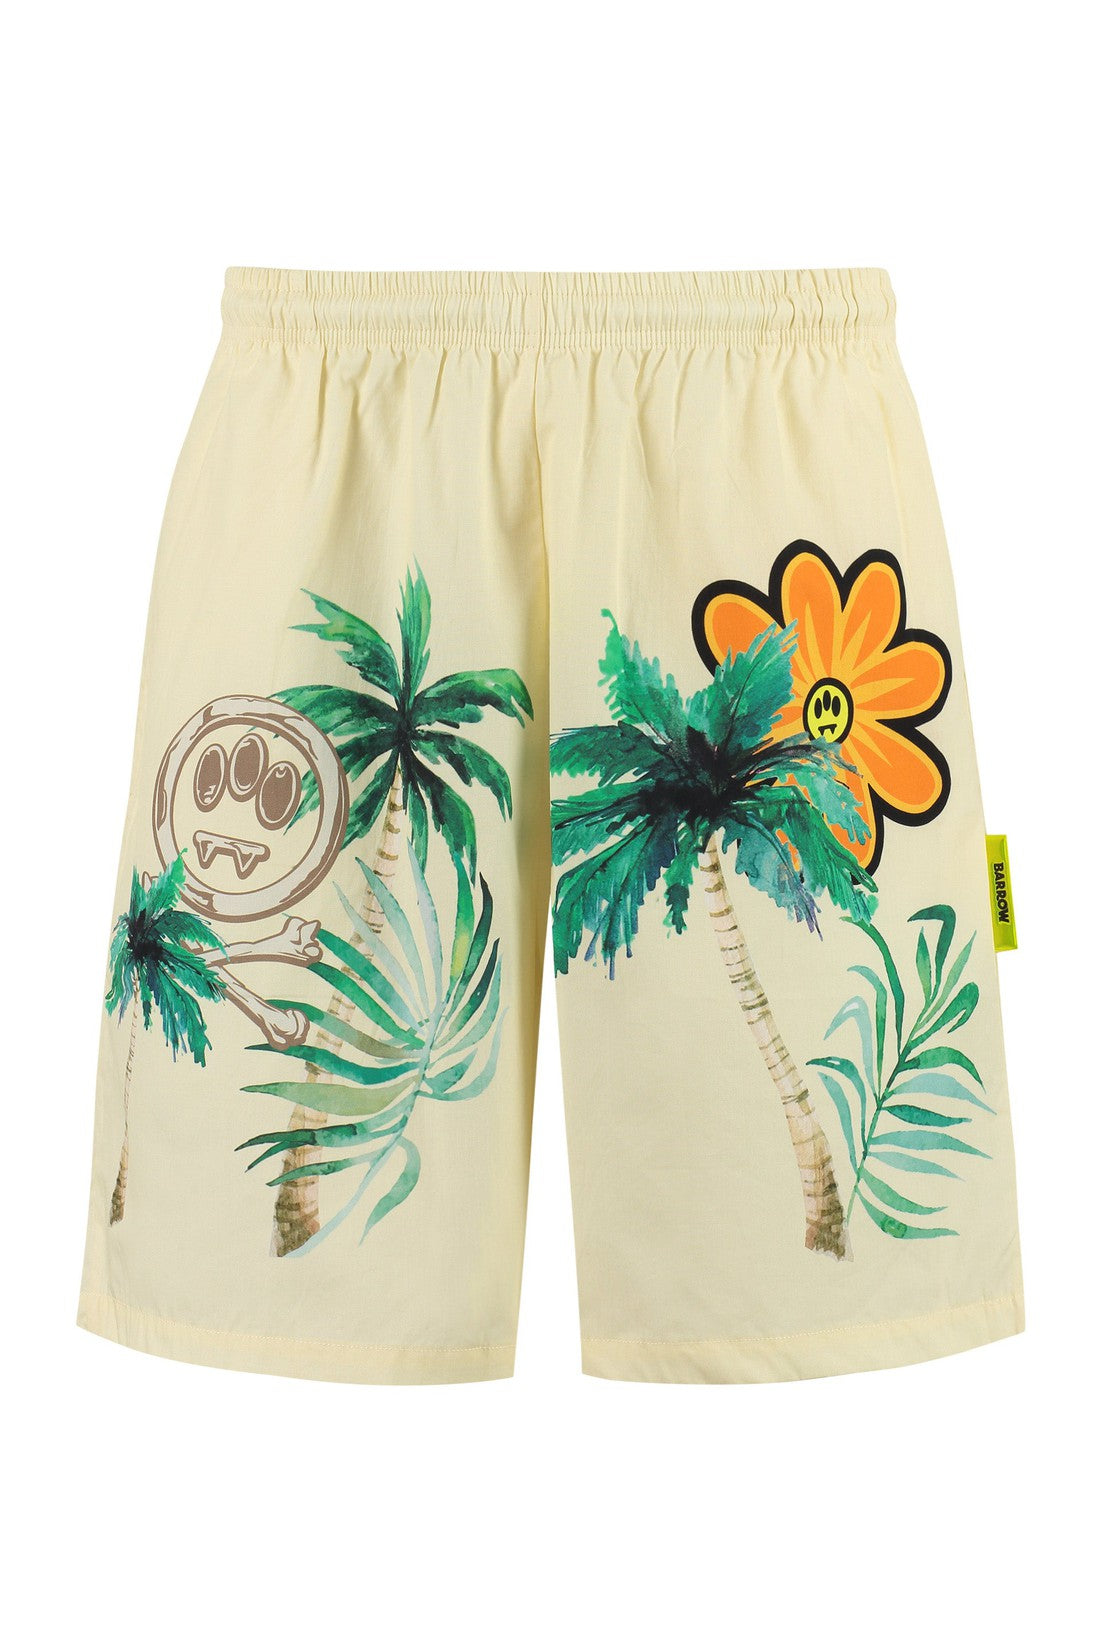 Barrow-OUTLET-SALE-Printed cotton Bermuda shorts-ARCHIVIST